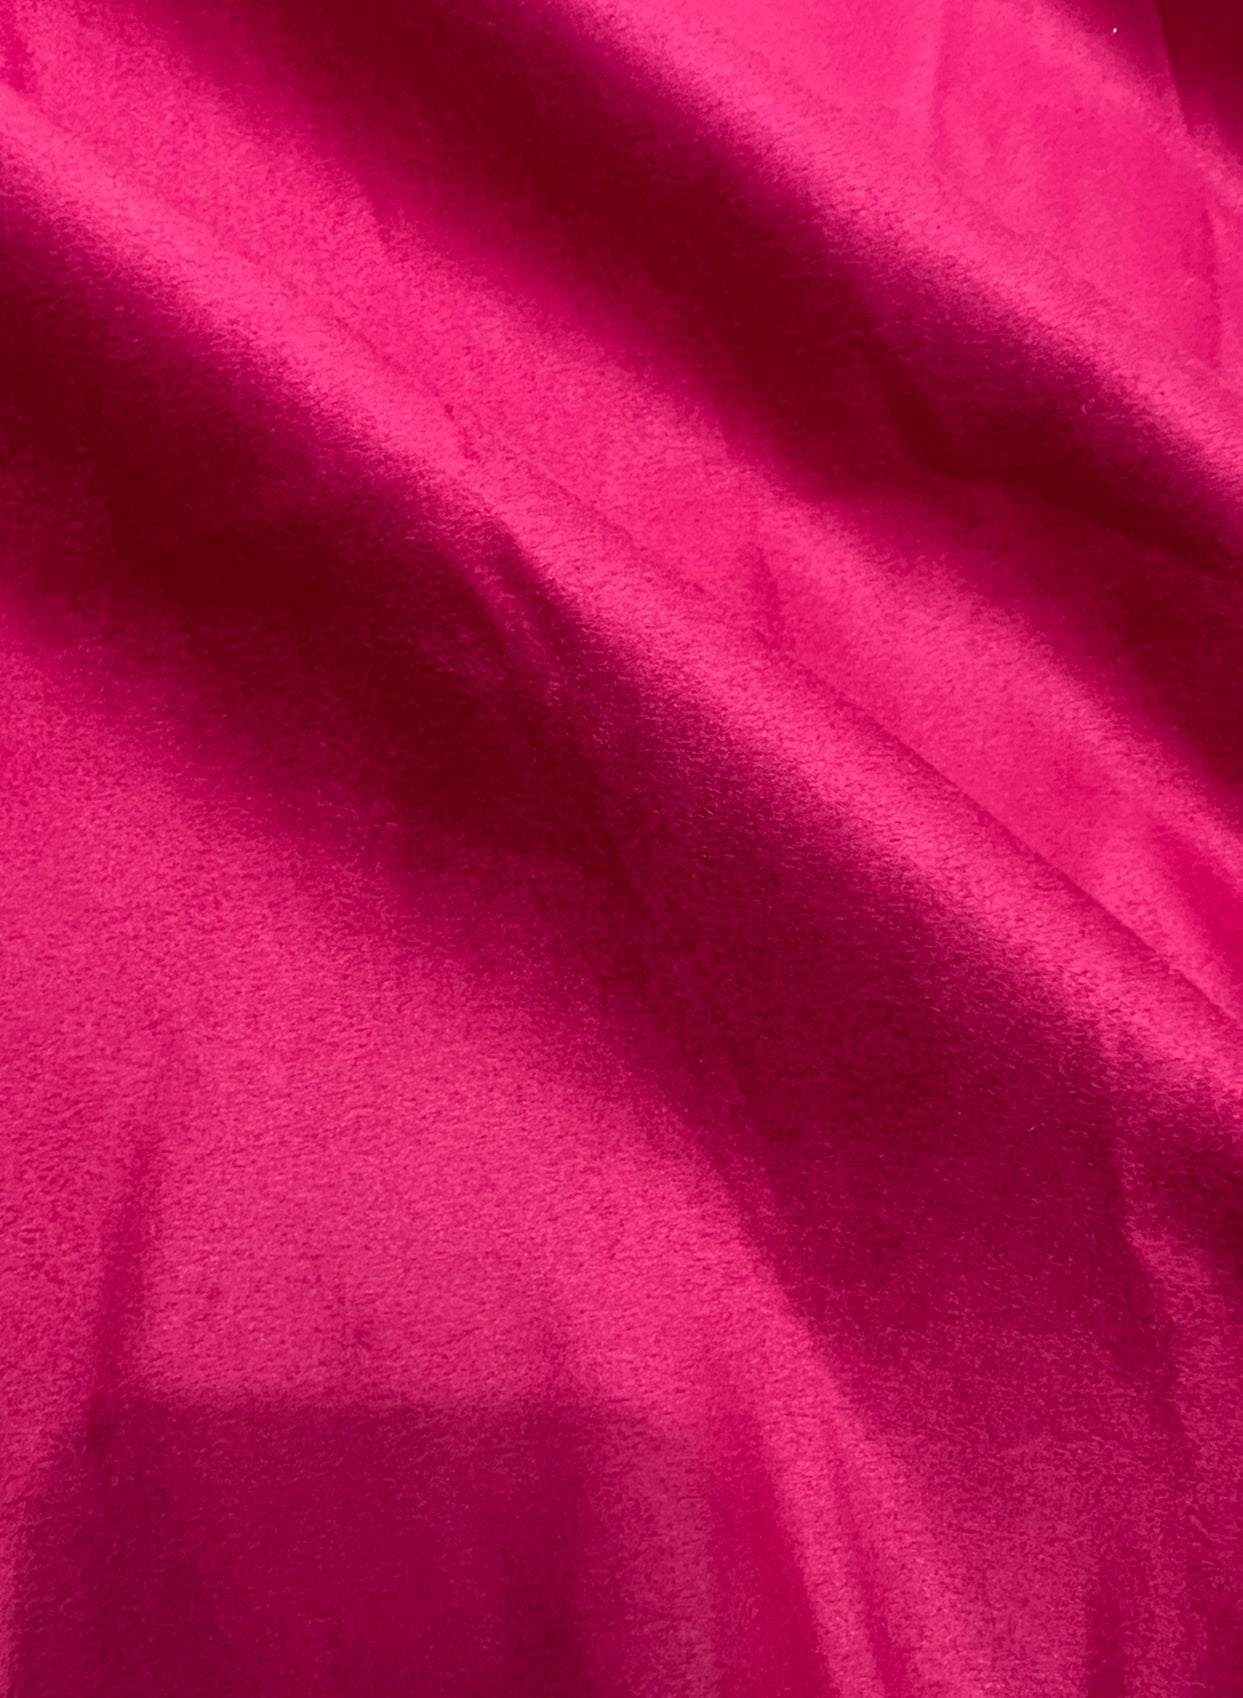 fuchsia Microsuede, pink microsuede, rose pink microsuede, premium microsuede, microsuede for sofa, microsuede for jackets, microsuede in low price, microsuede on discount, microsuede on sale, microsuede for apparels, microsuede for furniture